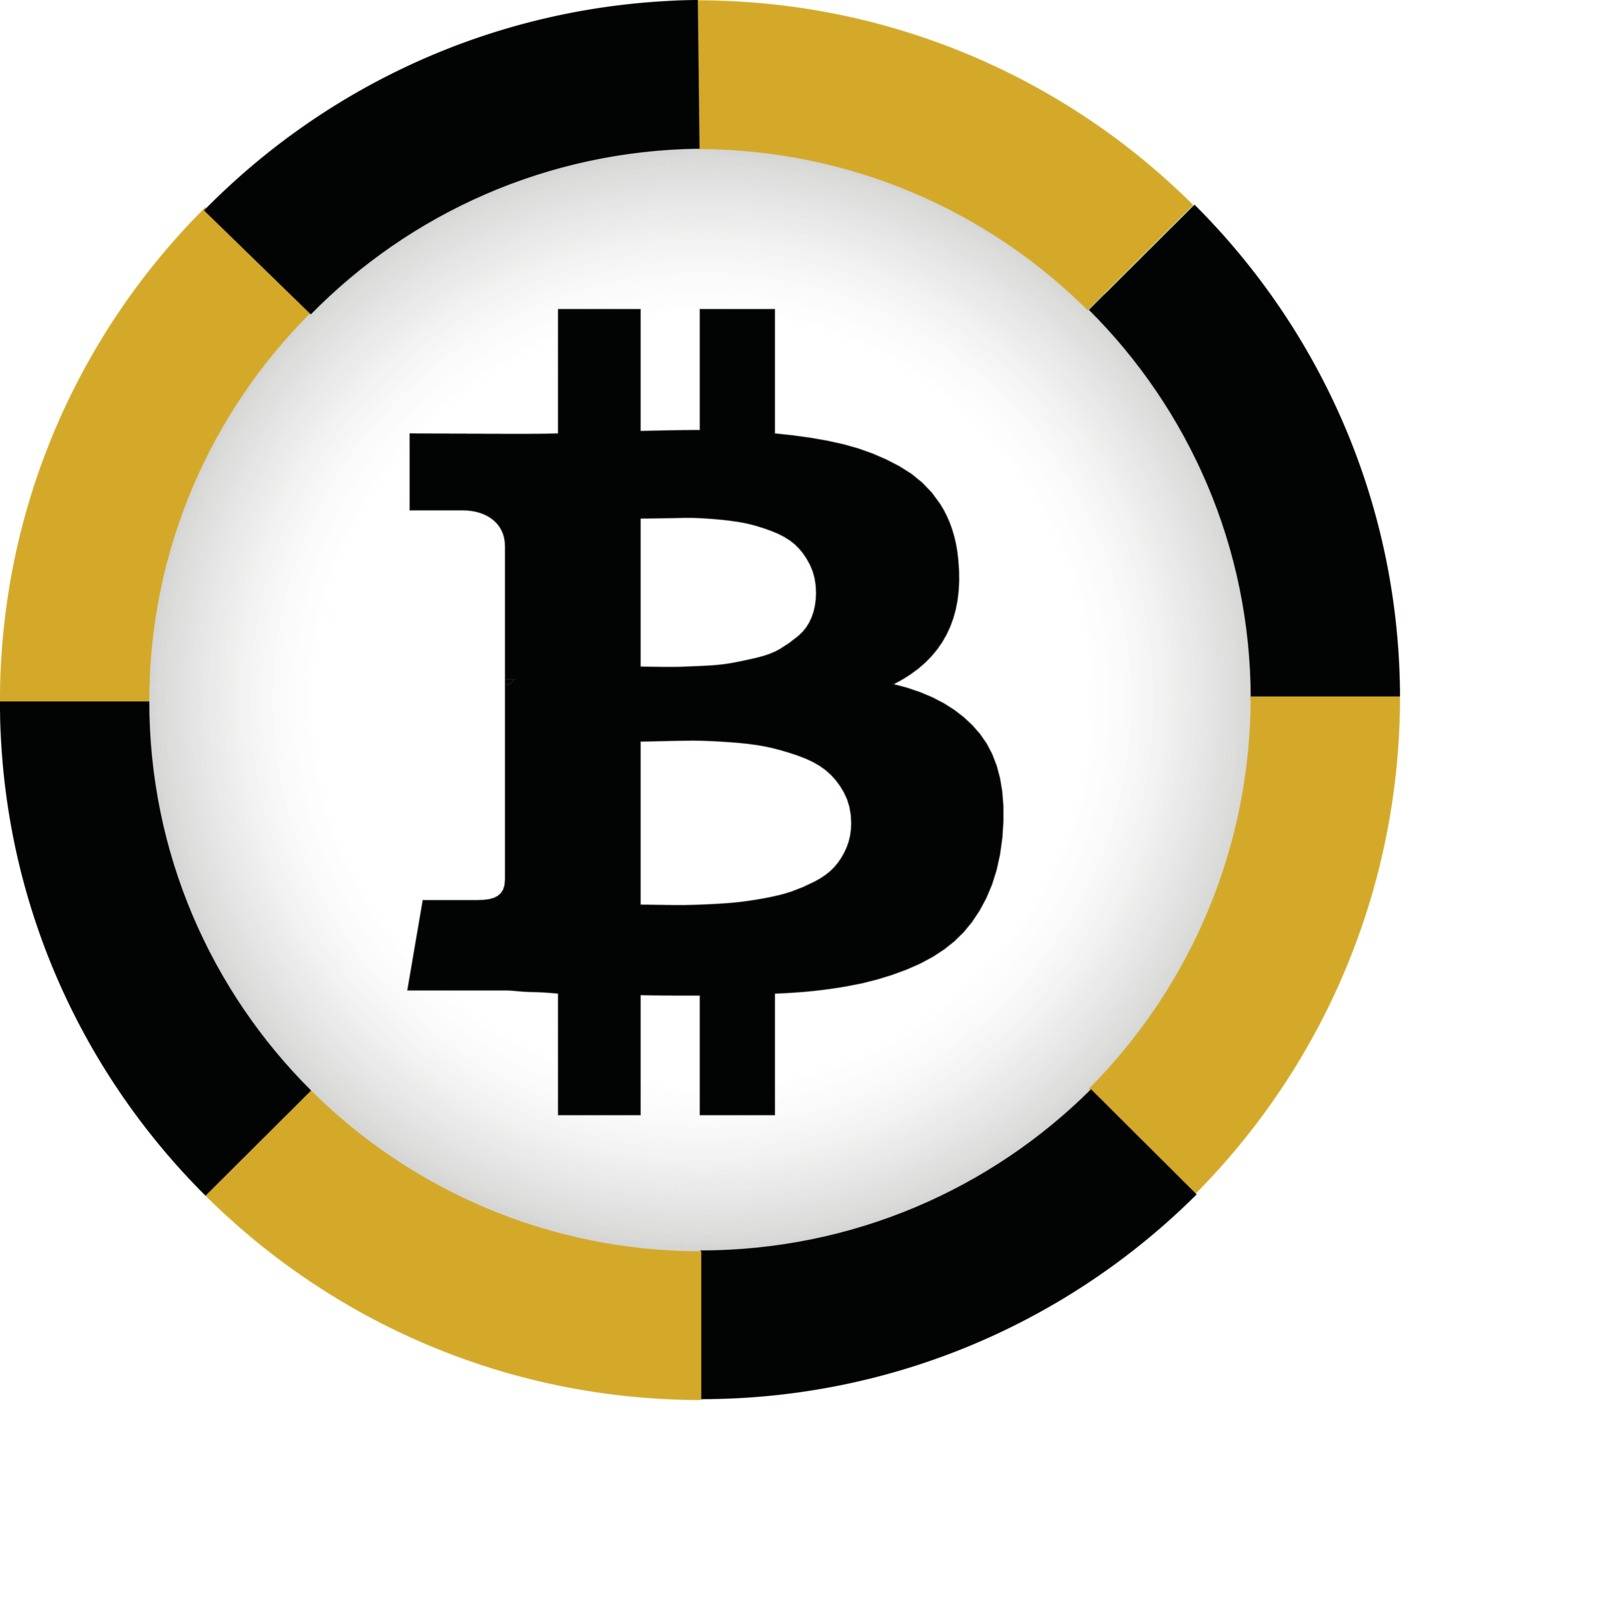 Bitcoin symbol. Cryptocurrency bitcoin vector icon 10 eps by Roman1030